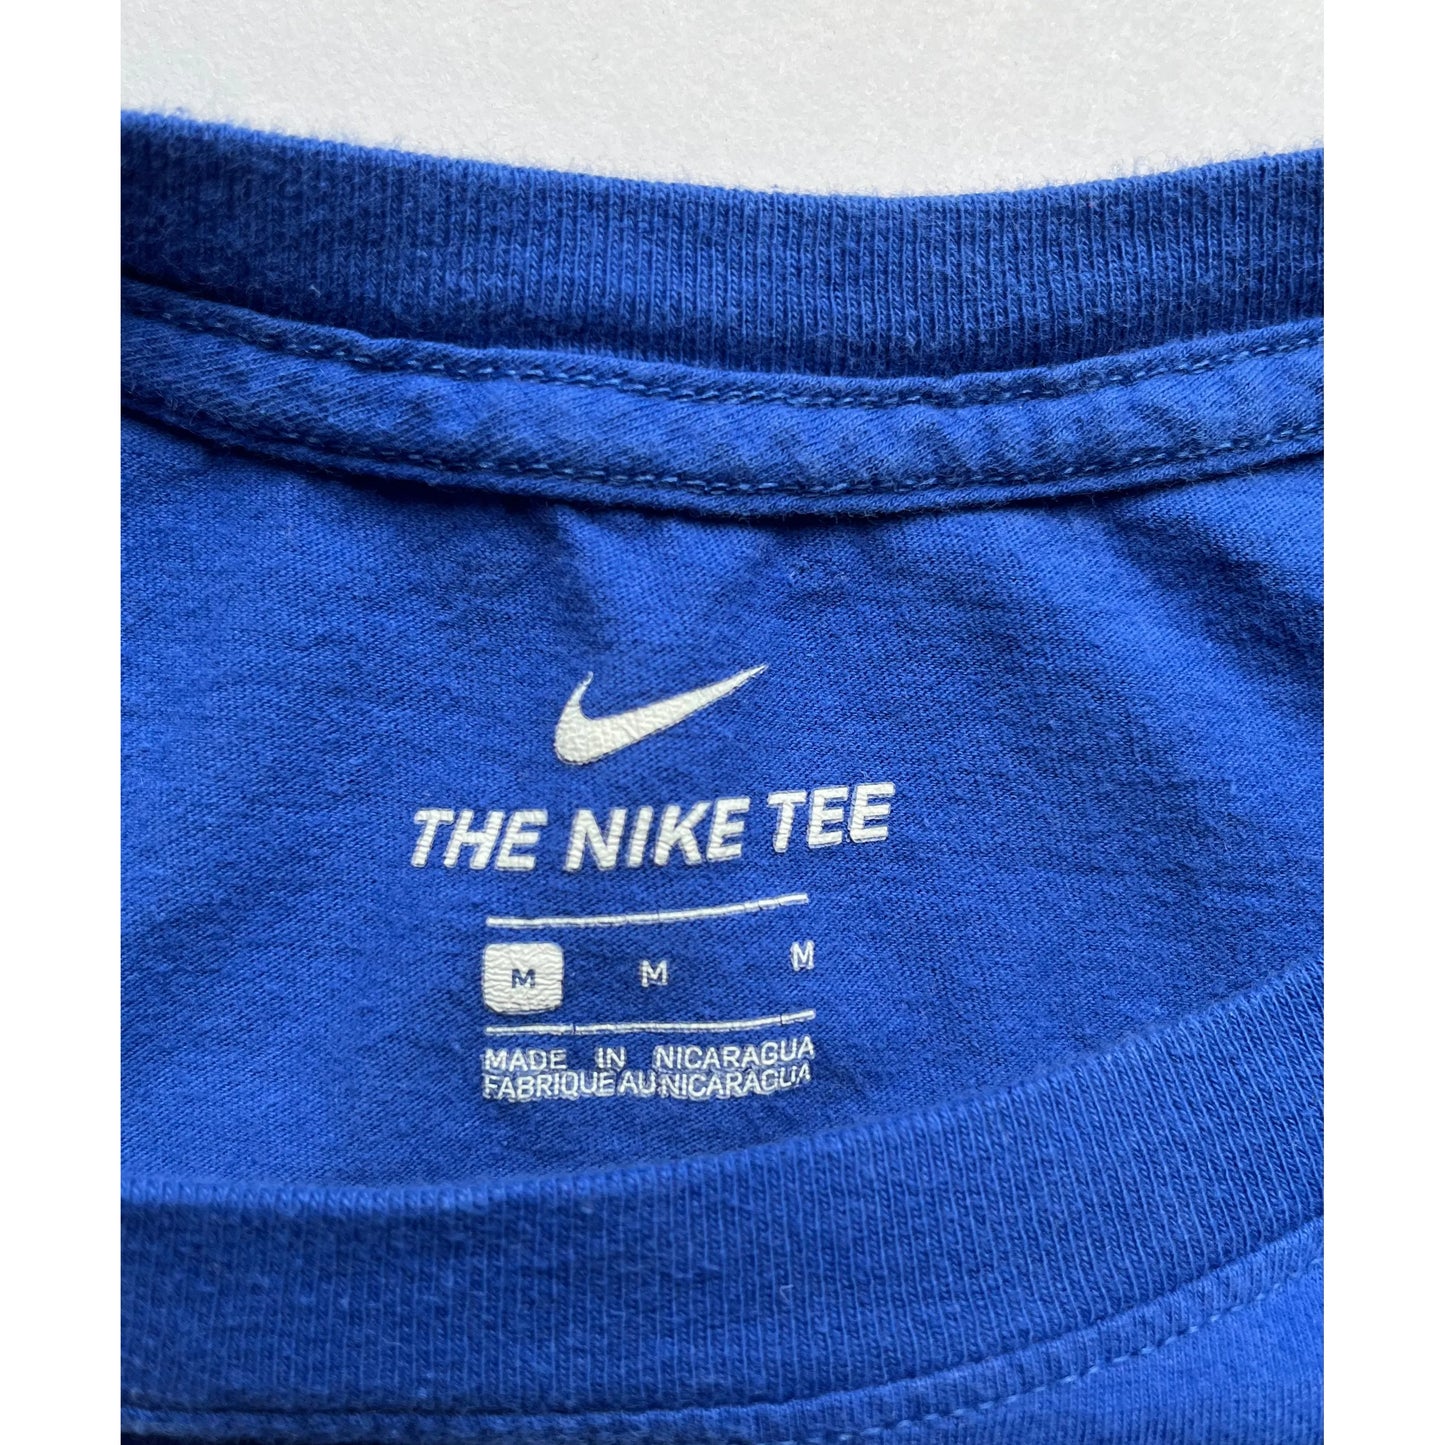 University of Kentucky - Nike Tee (Medium)